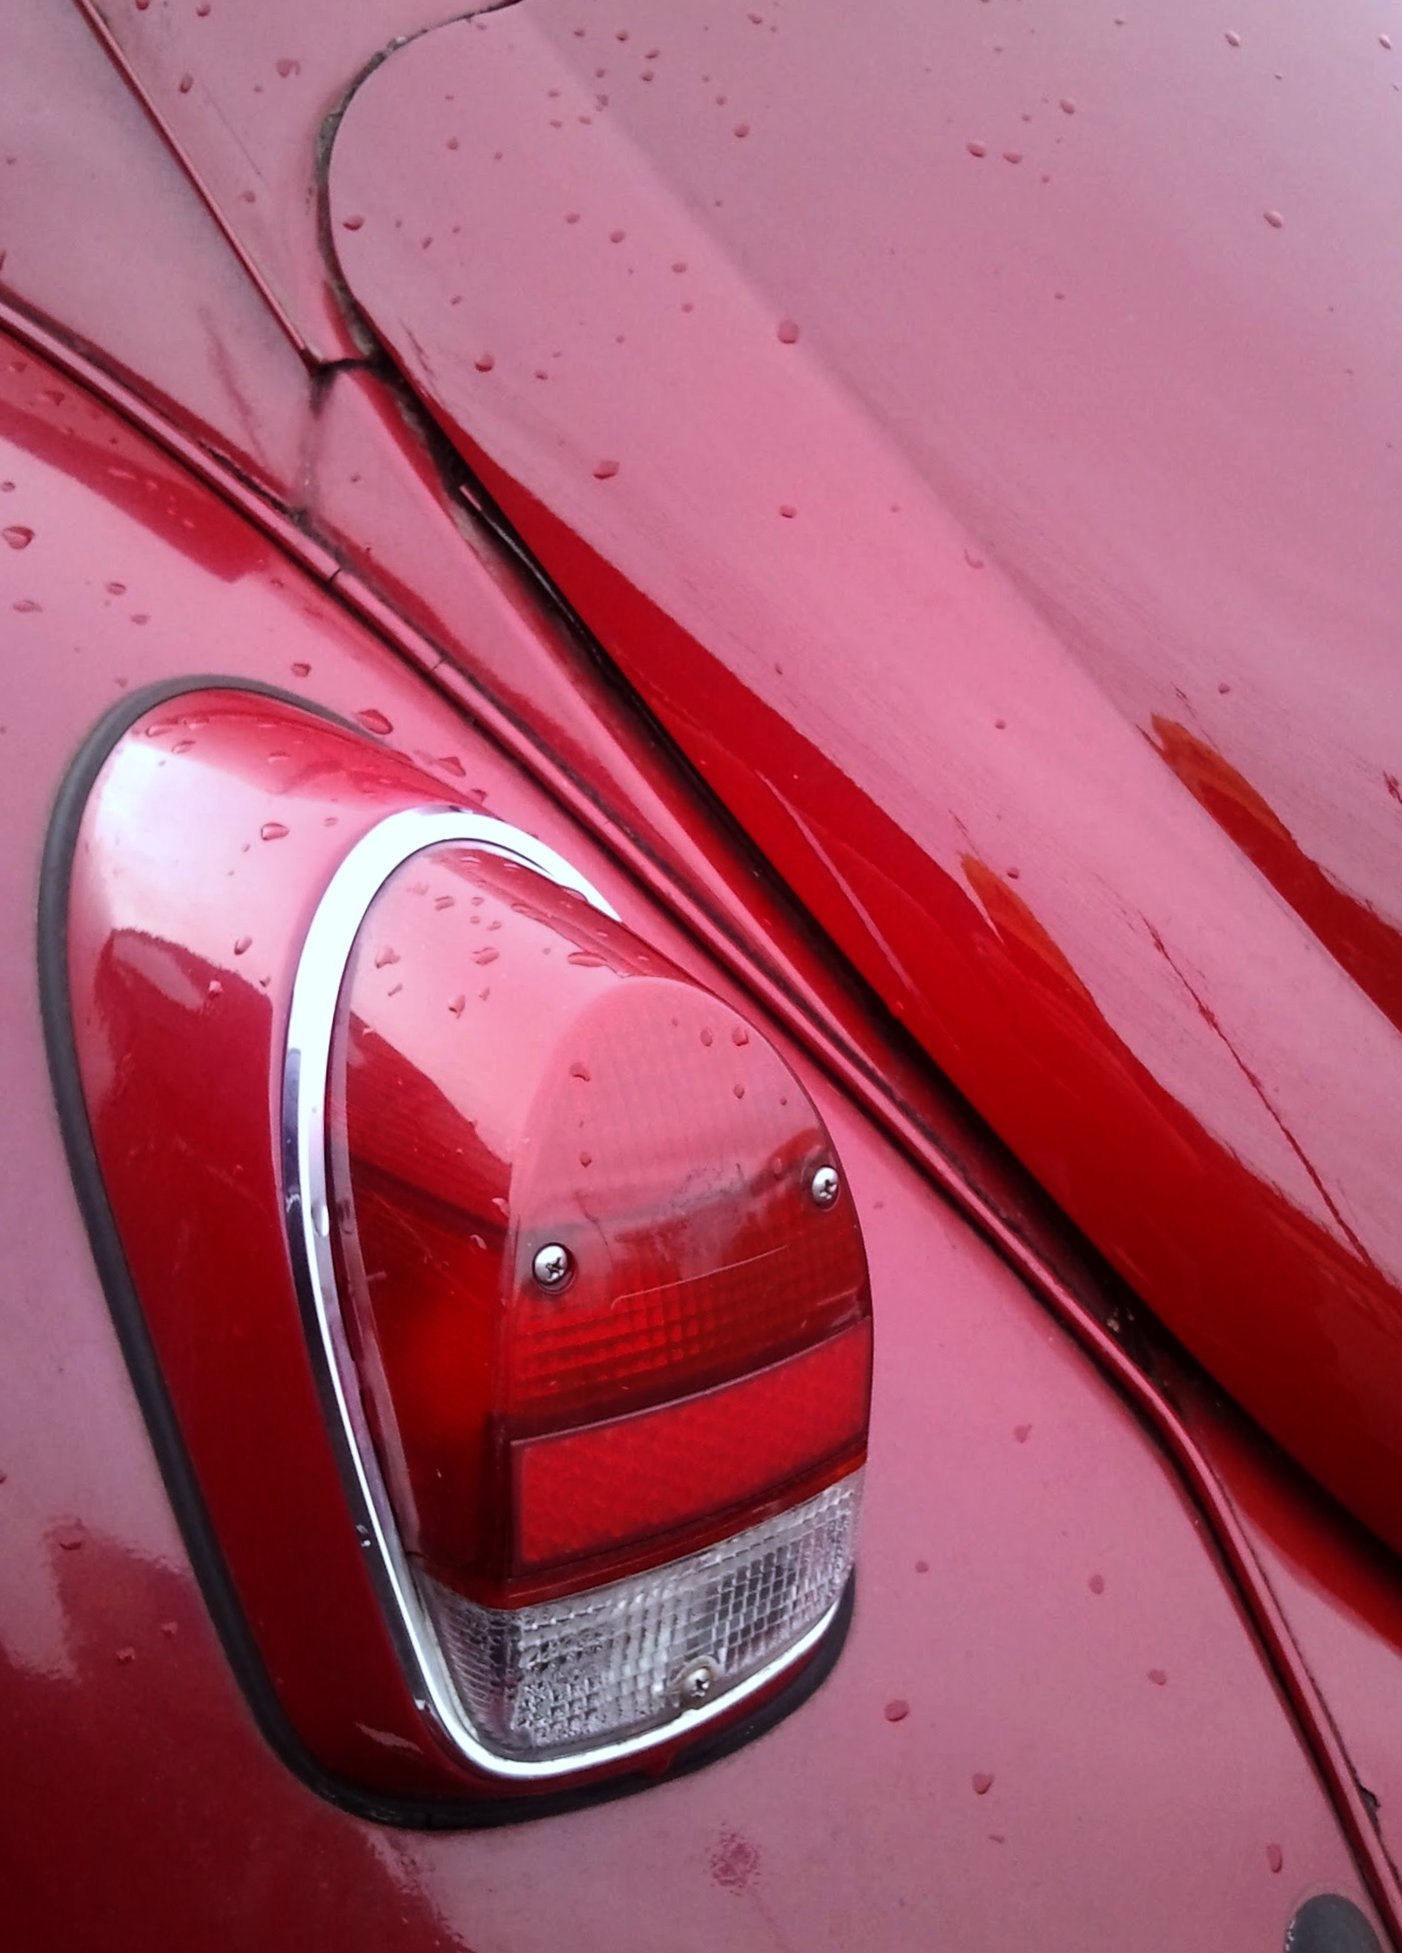 a closeup of a shiny red car with rain drops